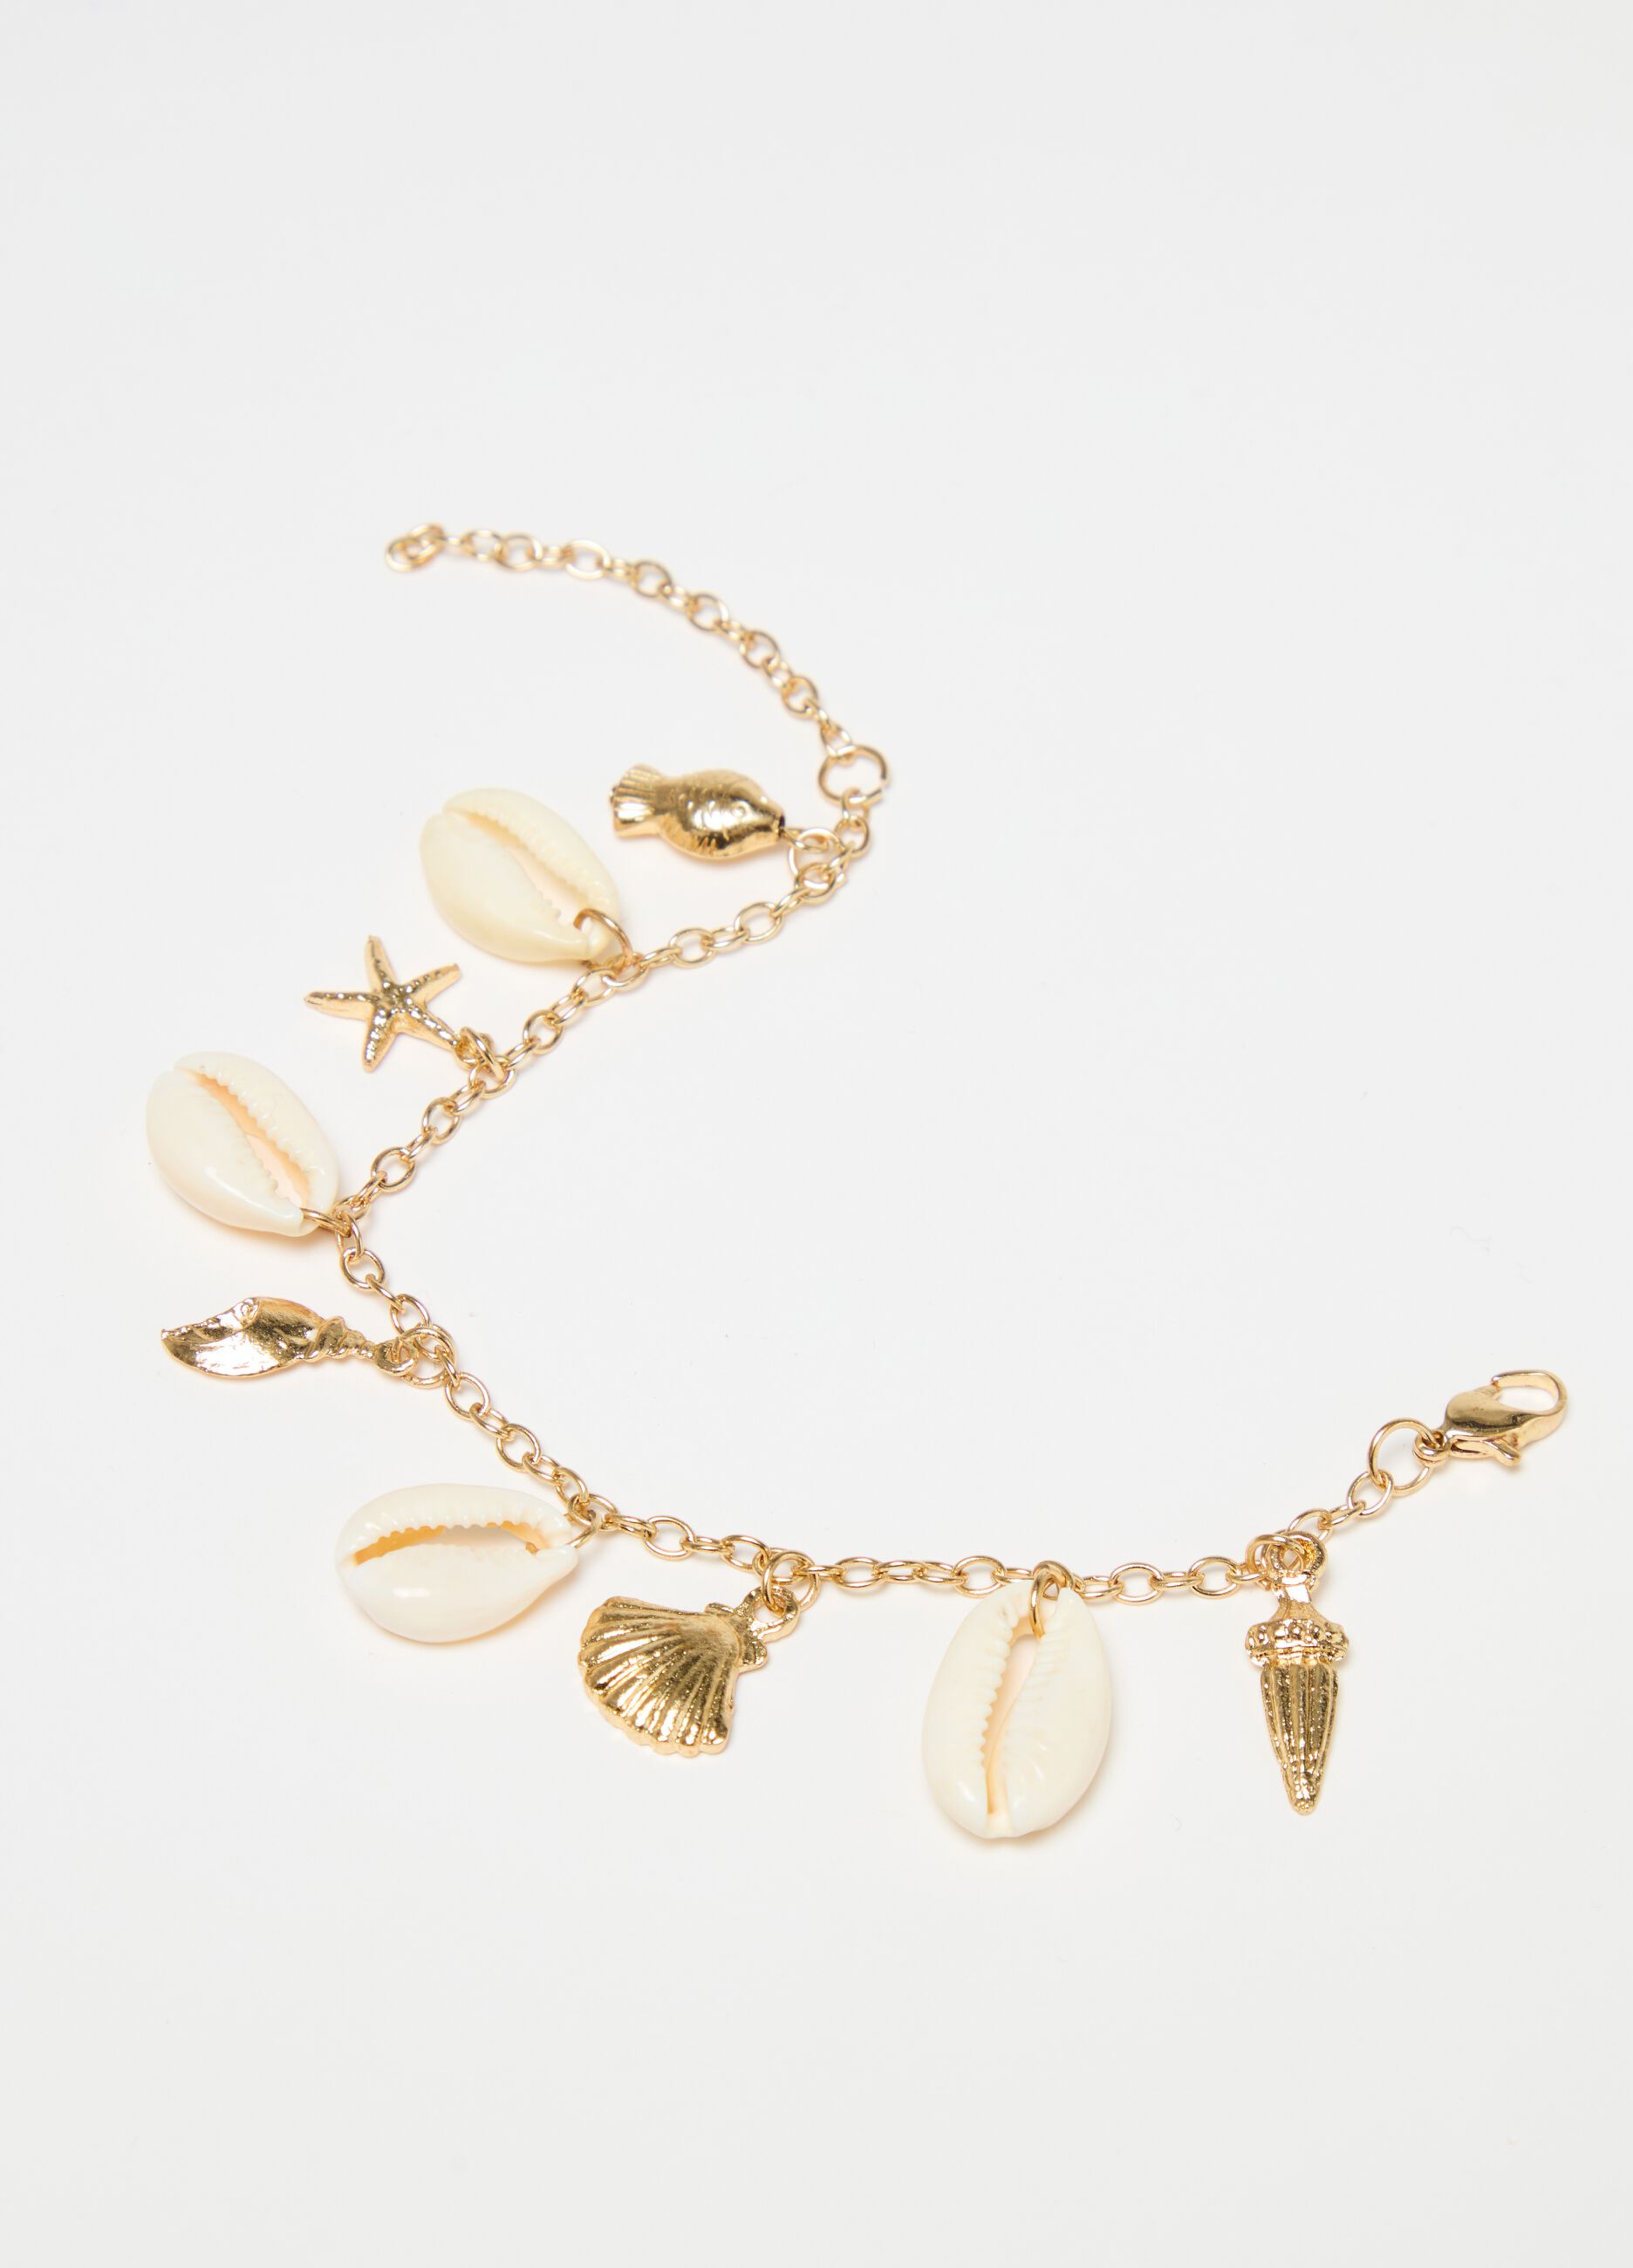 Bracelet with shells and sea pendants